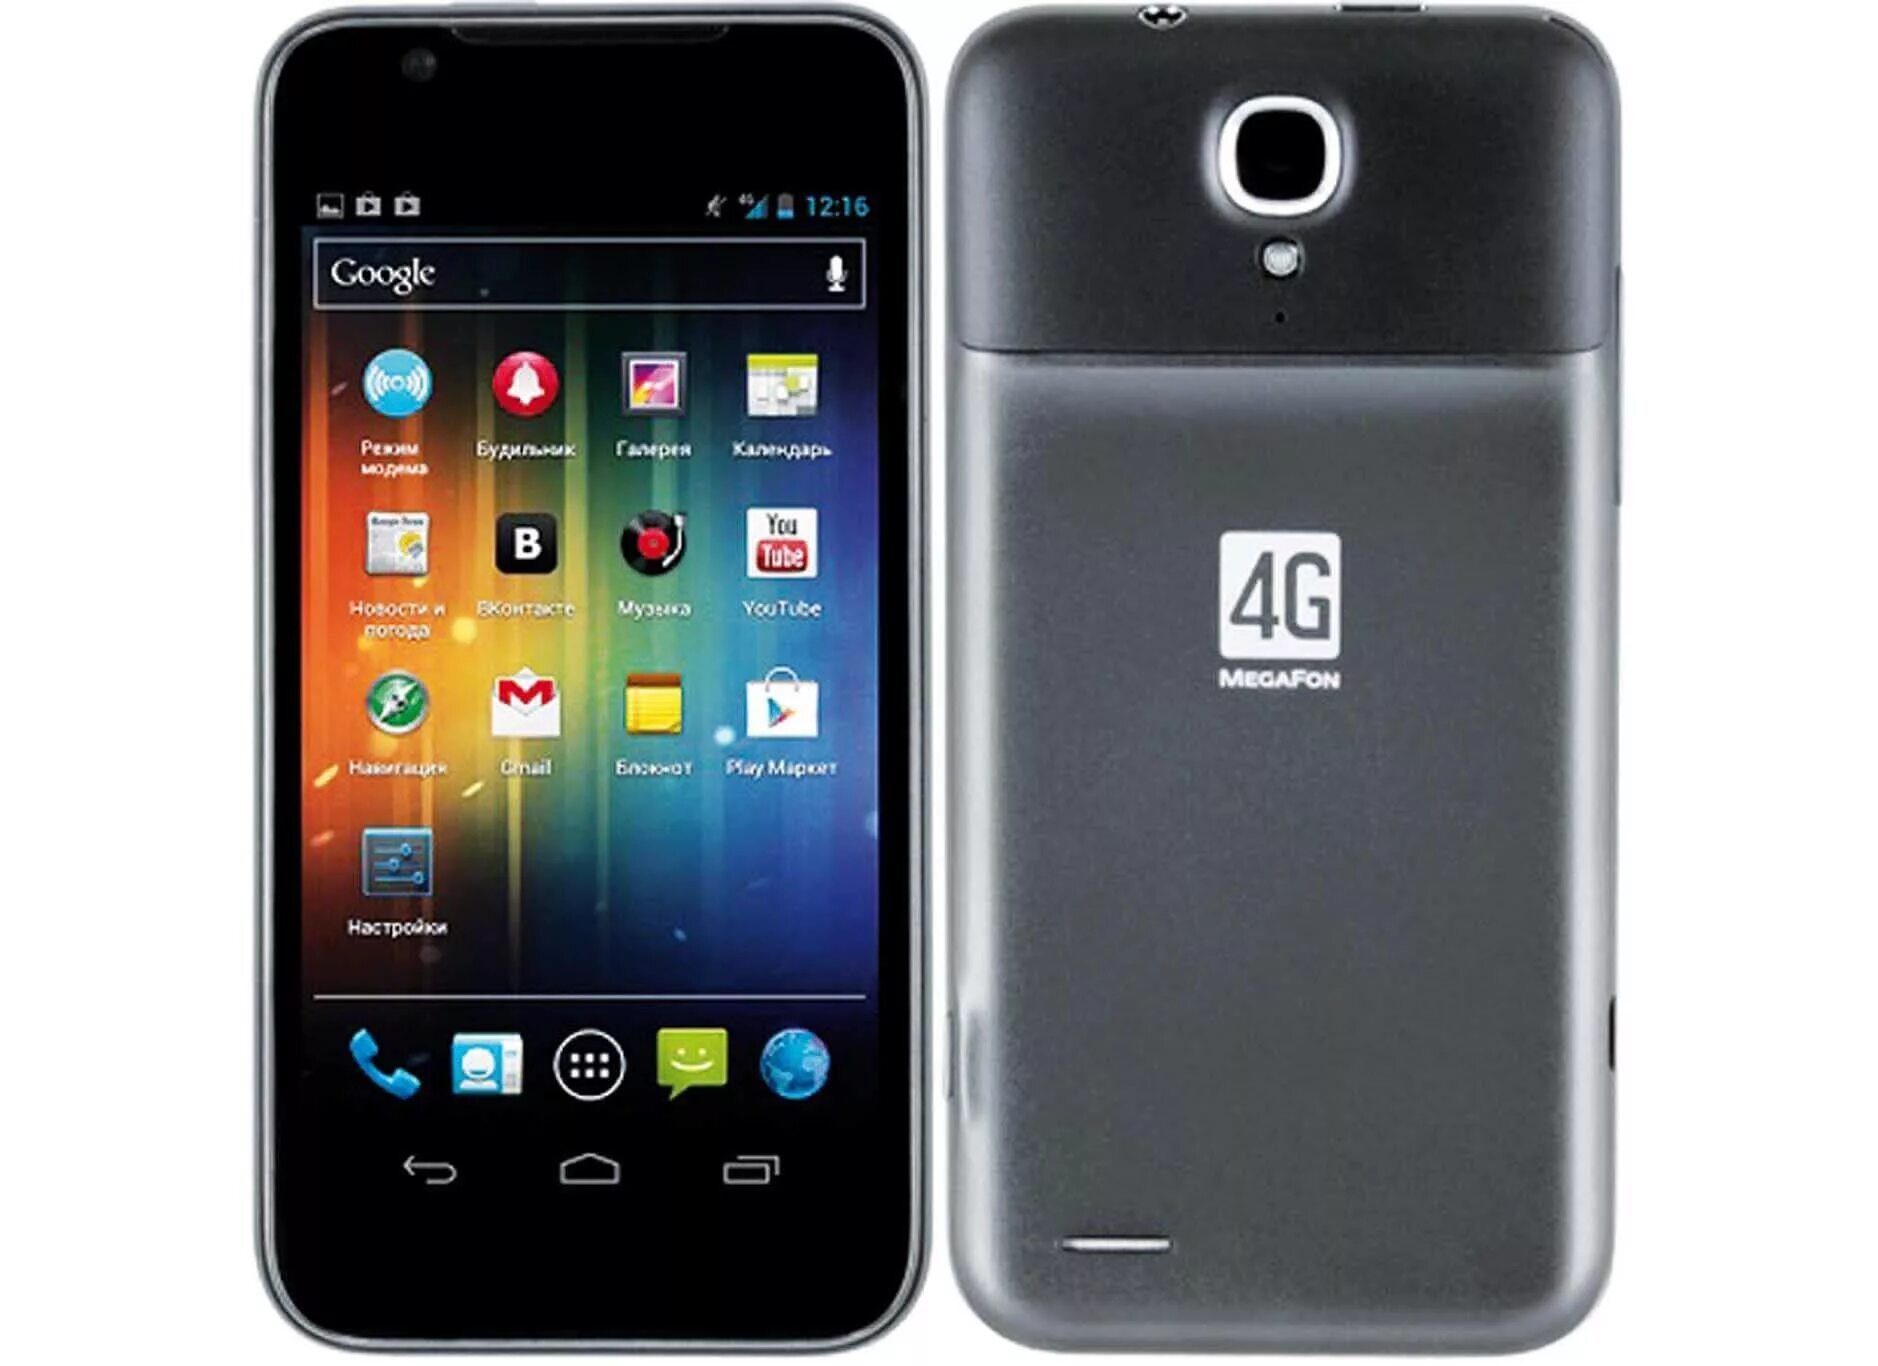 Smartfon ZTE 4g. Смартфон МЕГАФОН логин 4g. МЕГАФОН 4g Turbo. Телефон 4g LTE Китай.